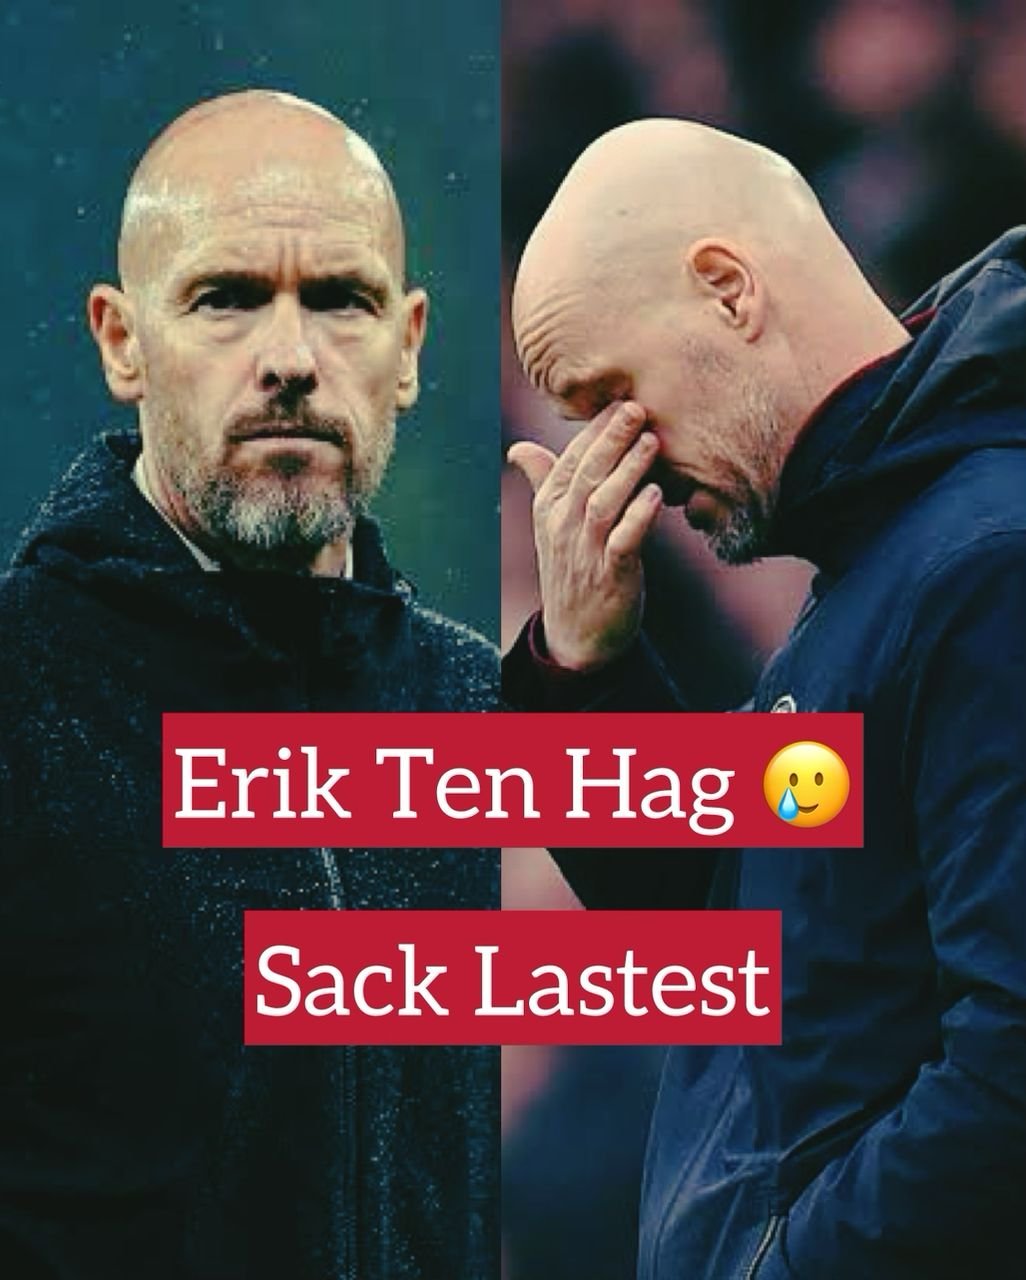 Manchester United coach lastest "SACK" news